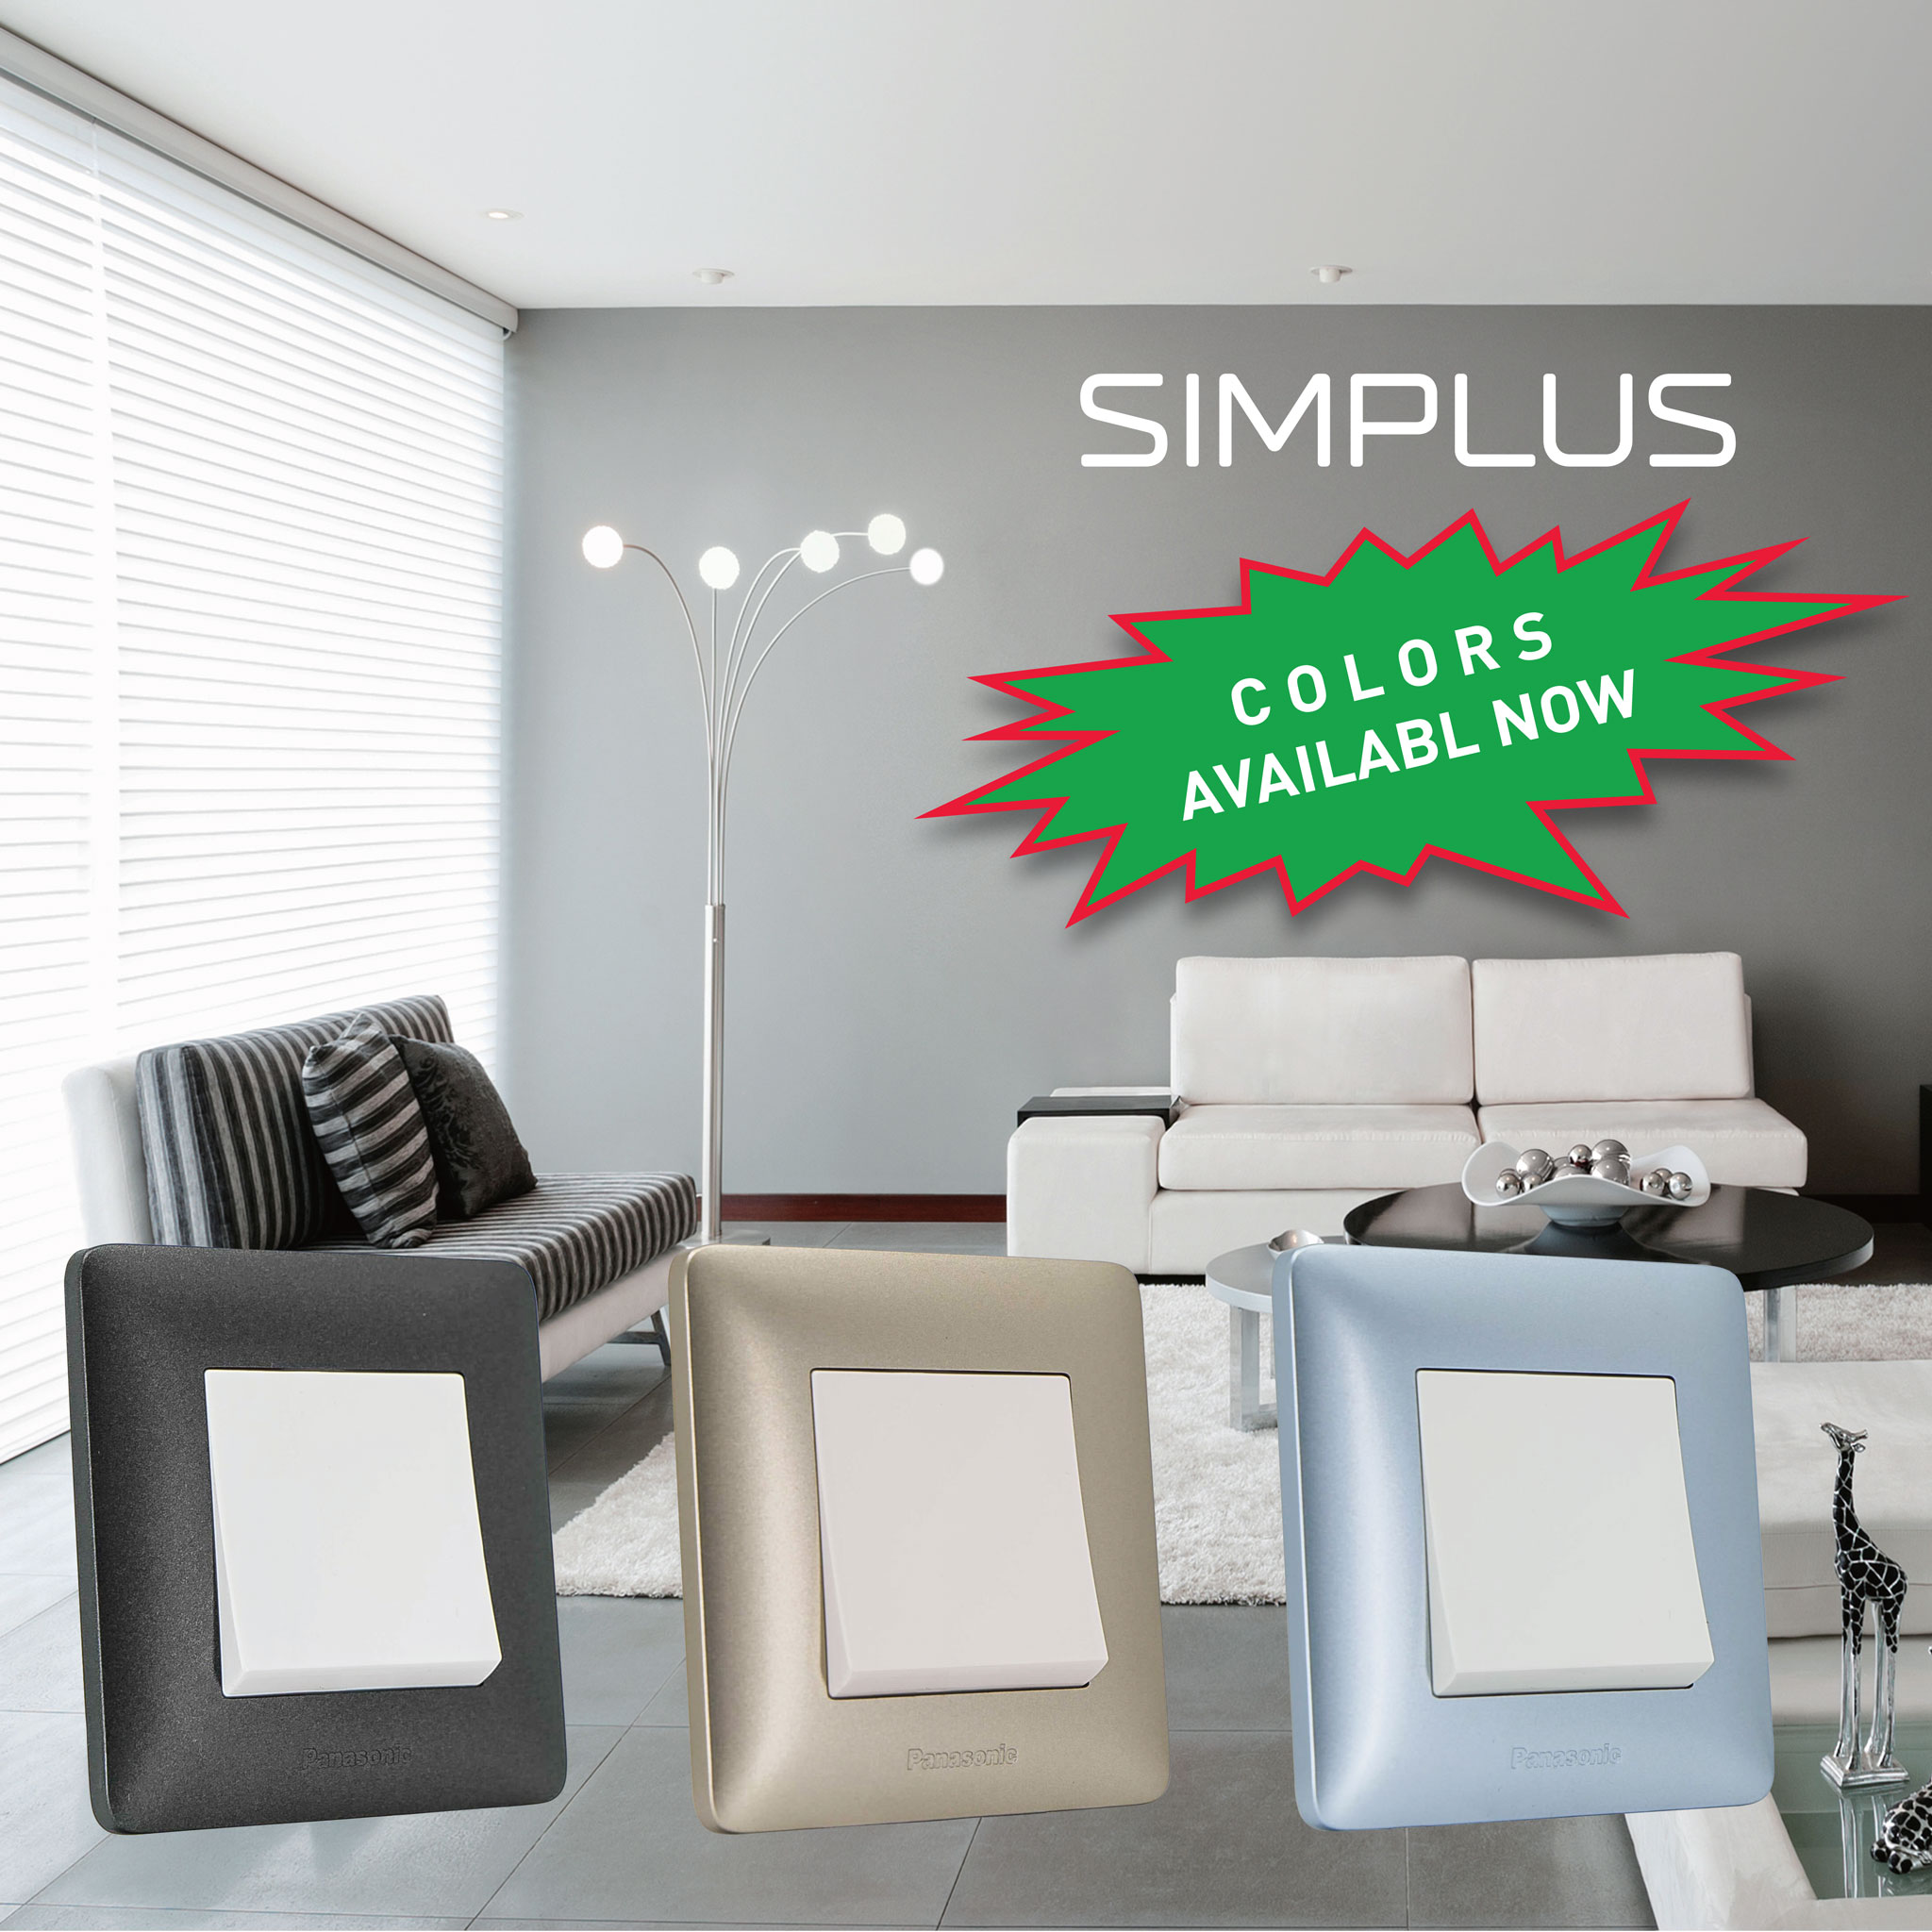 Panasonic Simplus colors available now